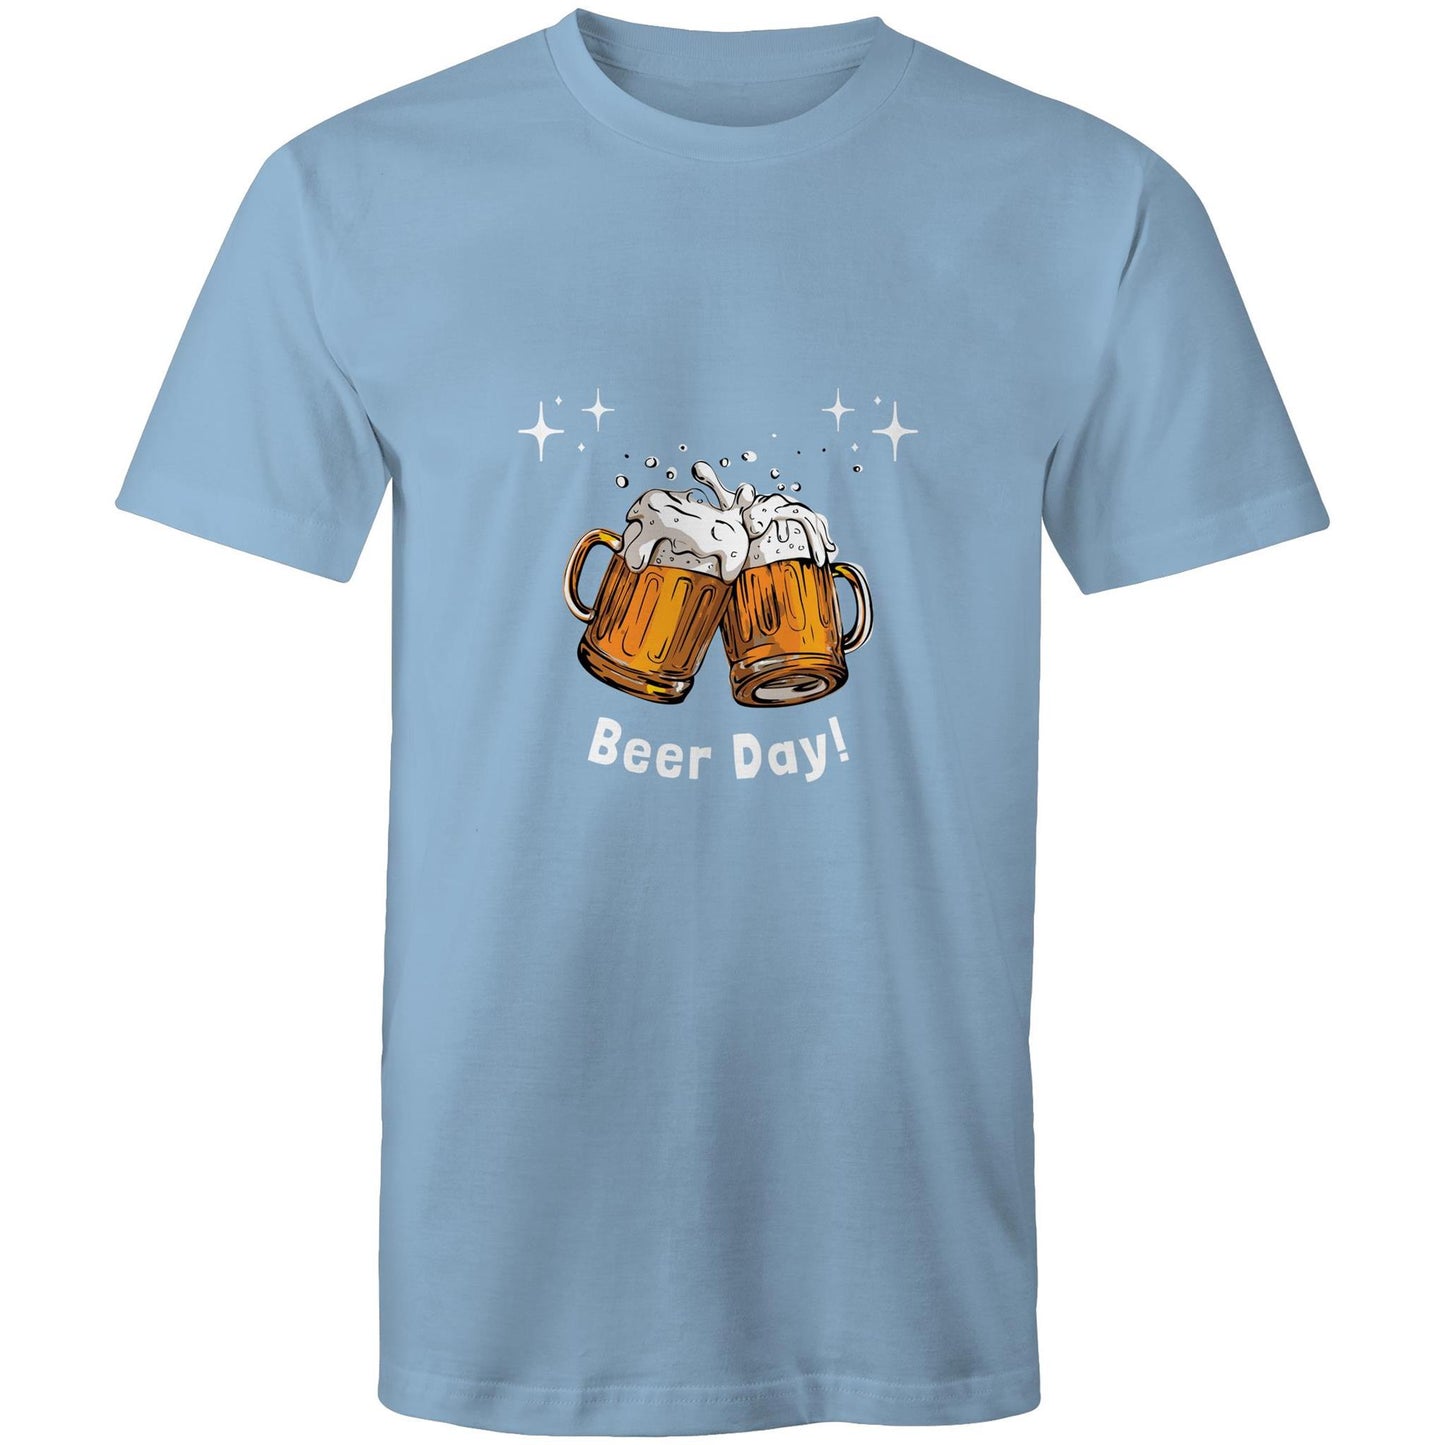 Beer Day - Mens T-Shirt